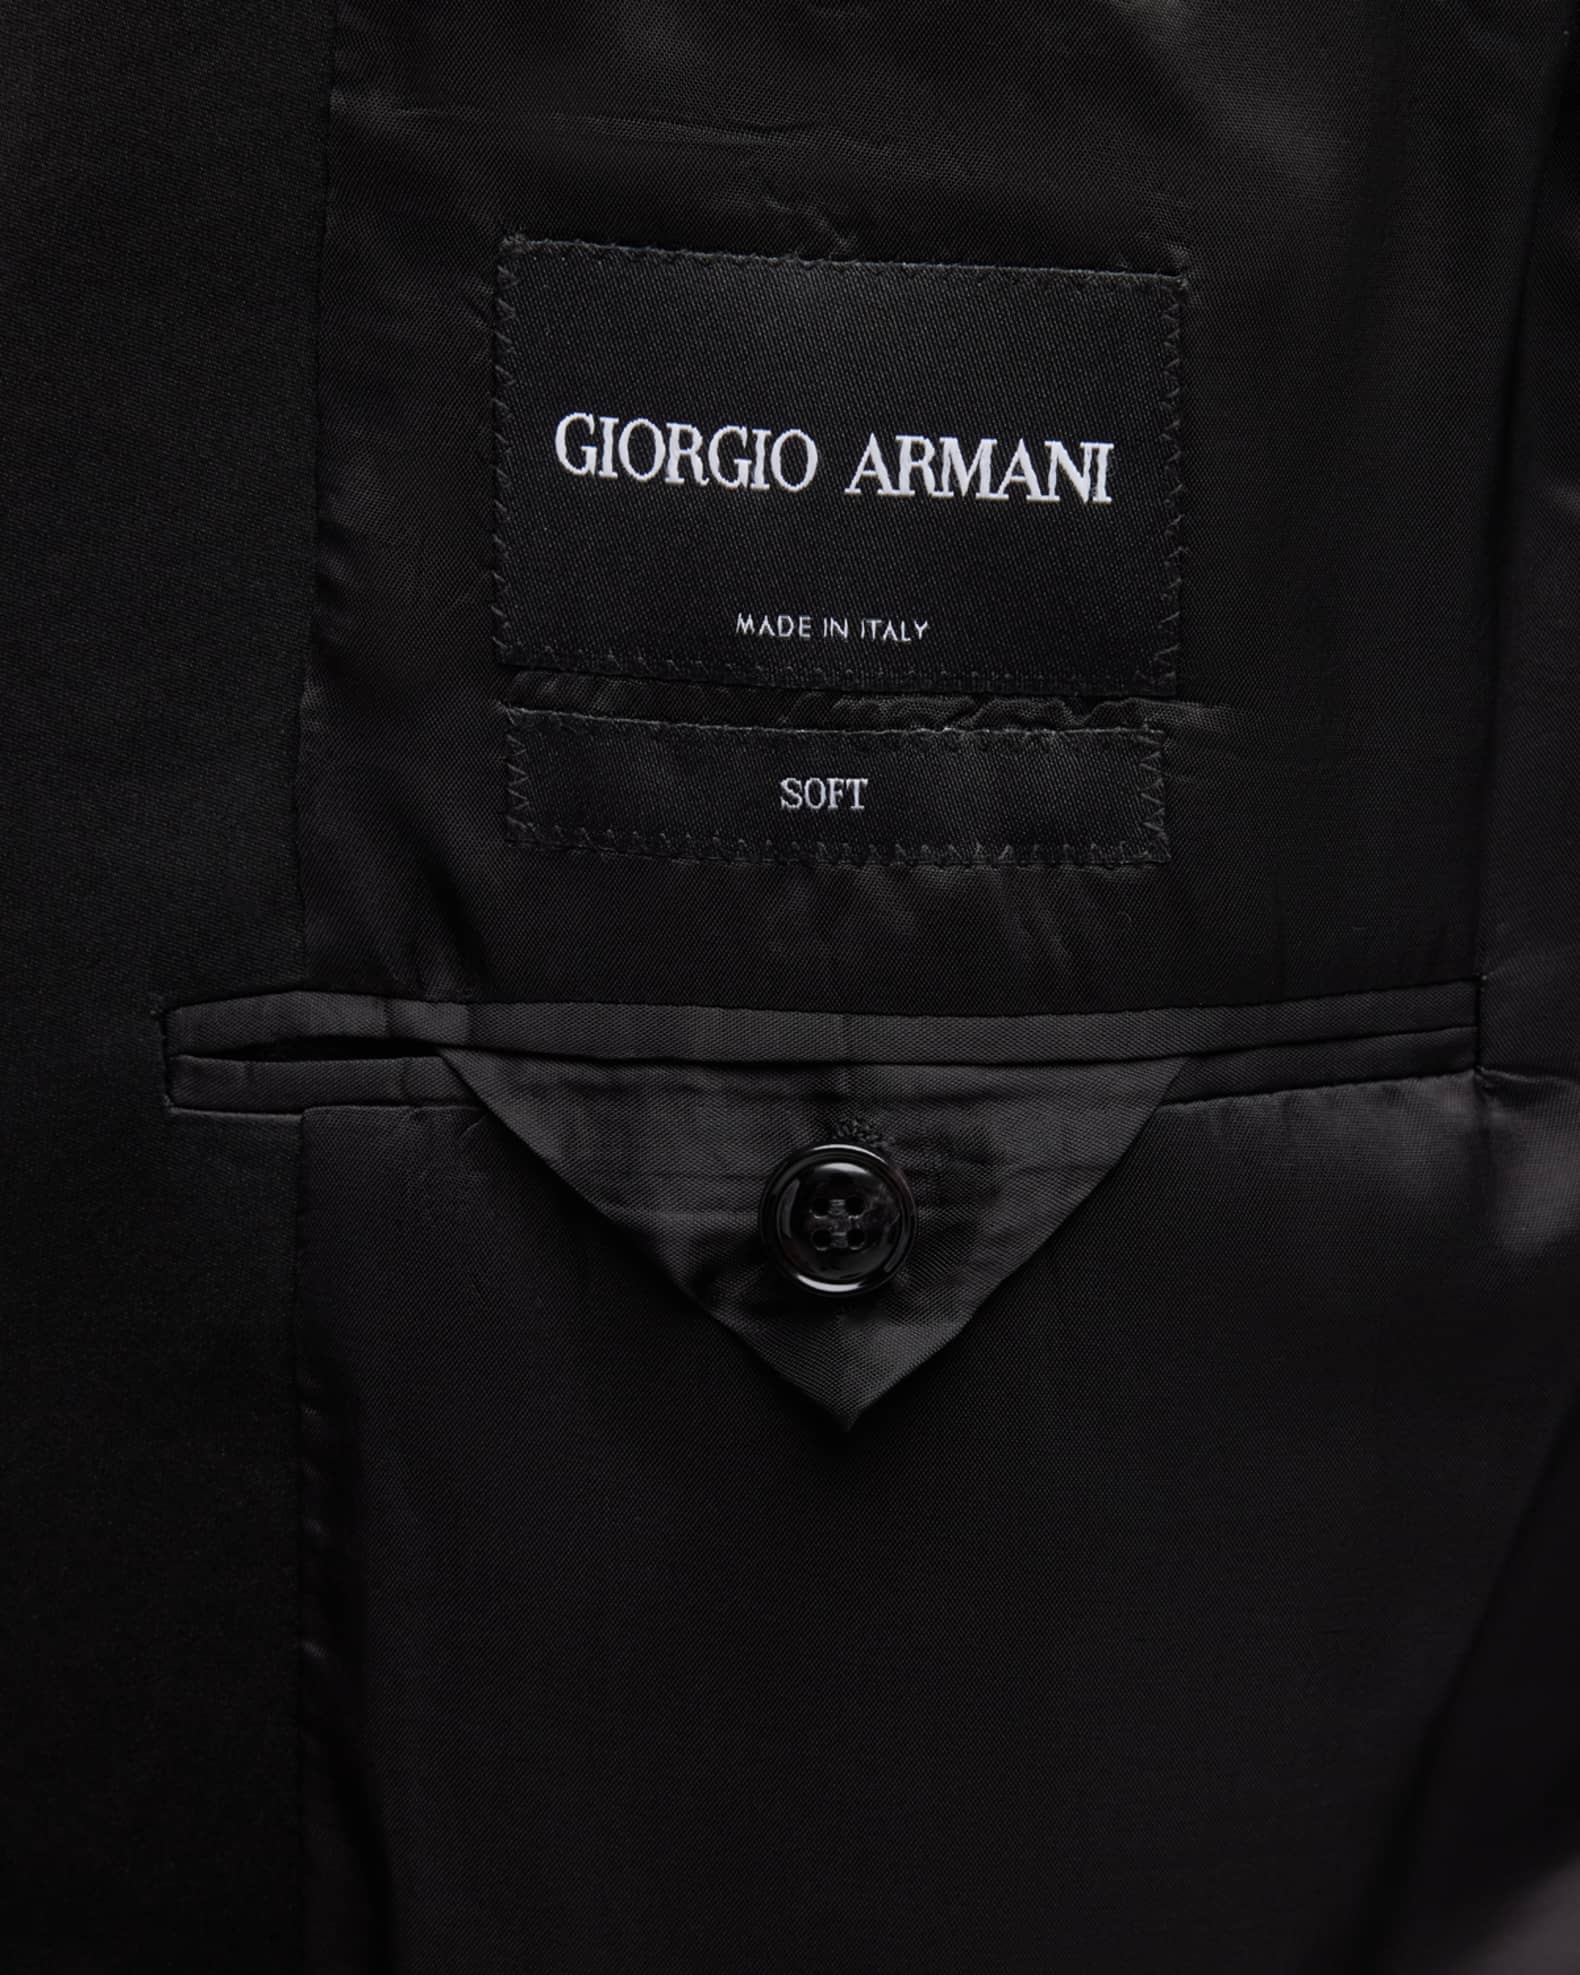 Giorgio Armani Men's Velvet Peak-Lapel Dinner Jacket | Neiman Marcus